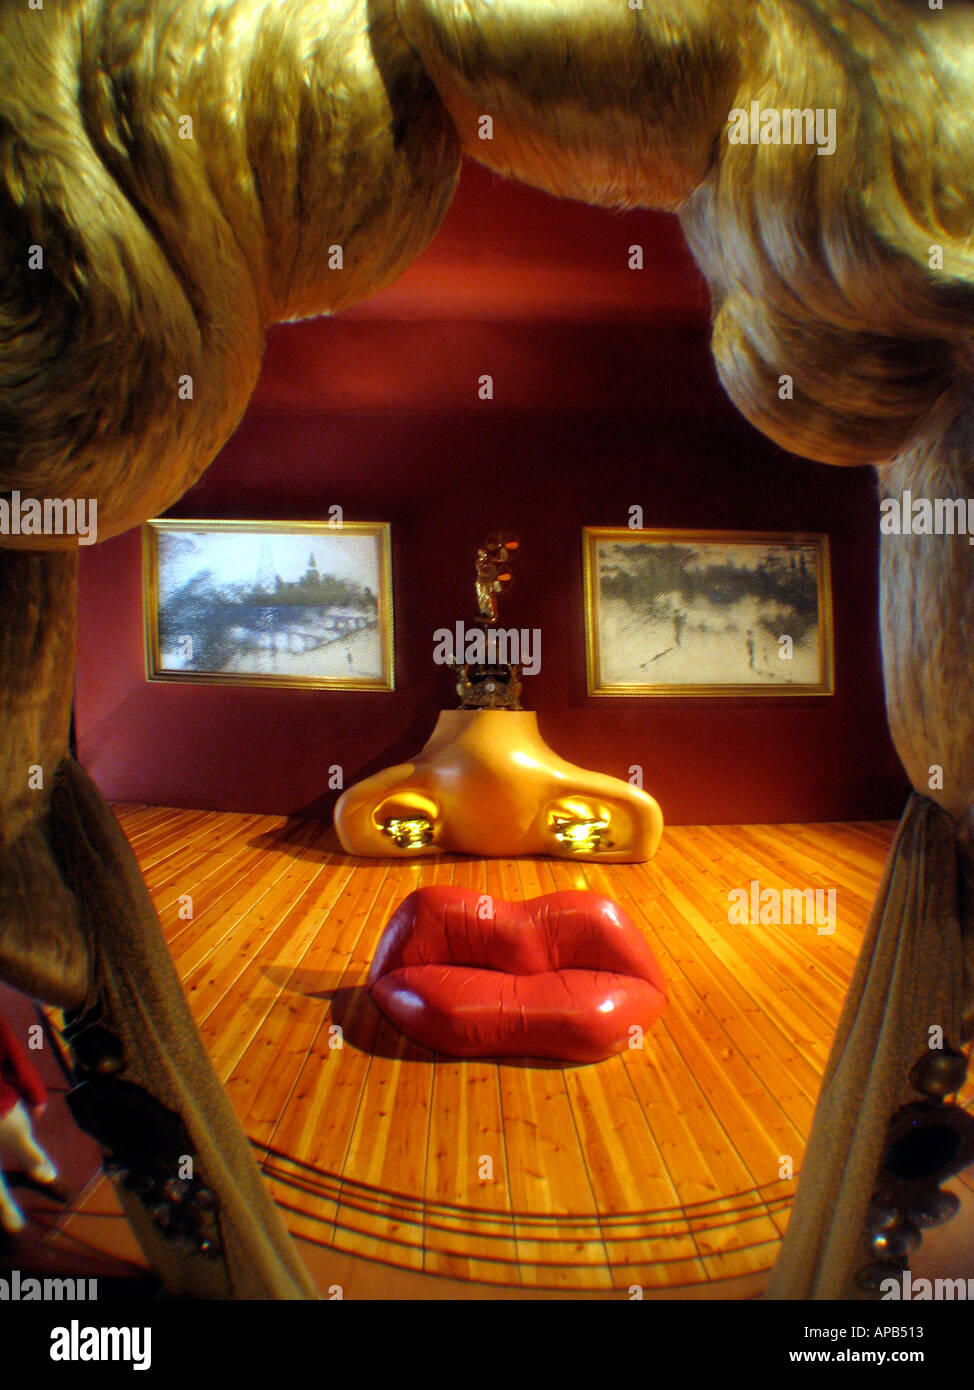 Dali lippen sofa -Fotos und -Bildmaterial in hoher Auflösung – Alamy